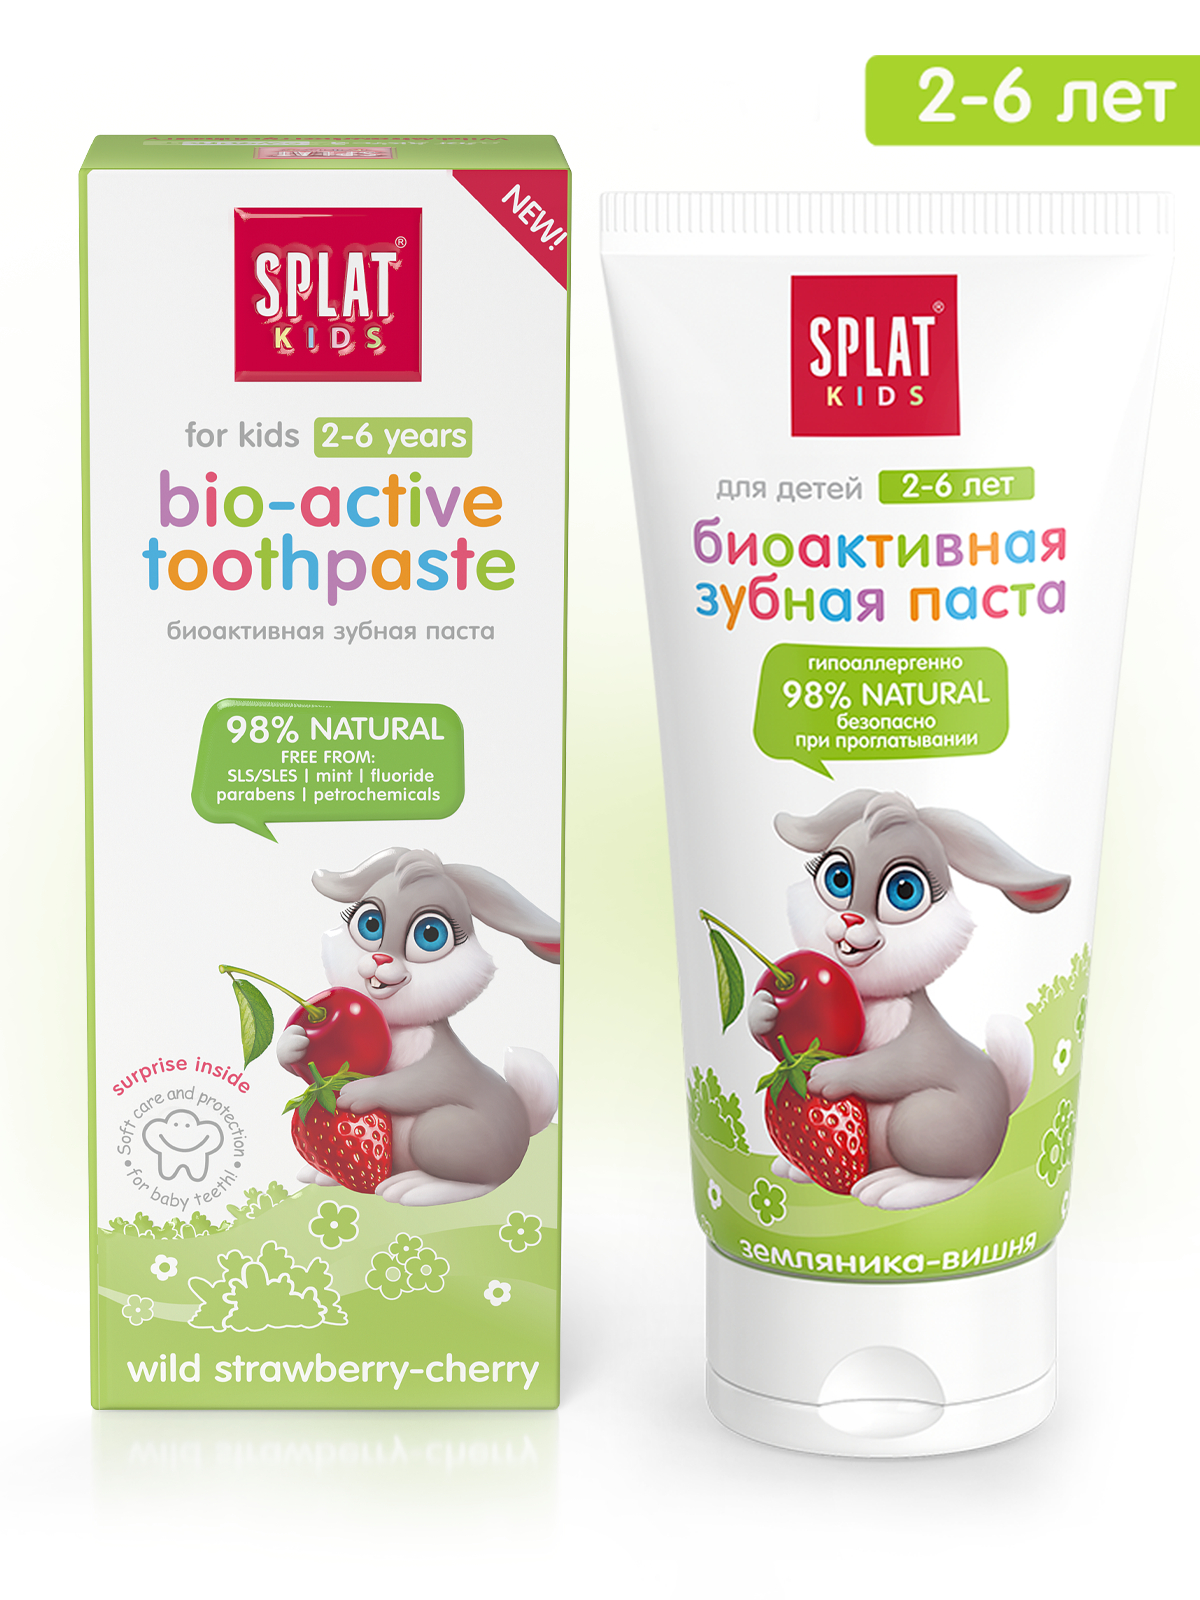 Зубная паста детская SPLAT Kids Земляника-вишня, от 2 до 6 лет 50 мл зубная паста splat professional лечебные травы 80 мл